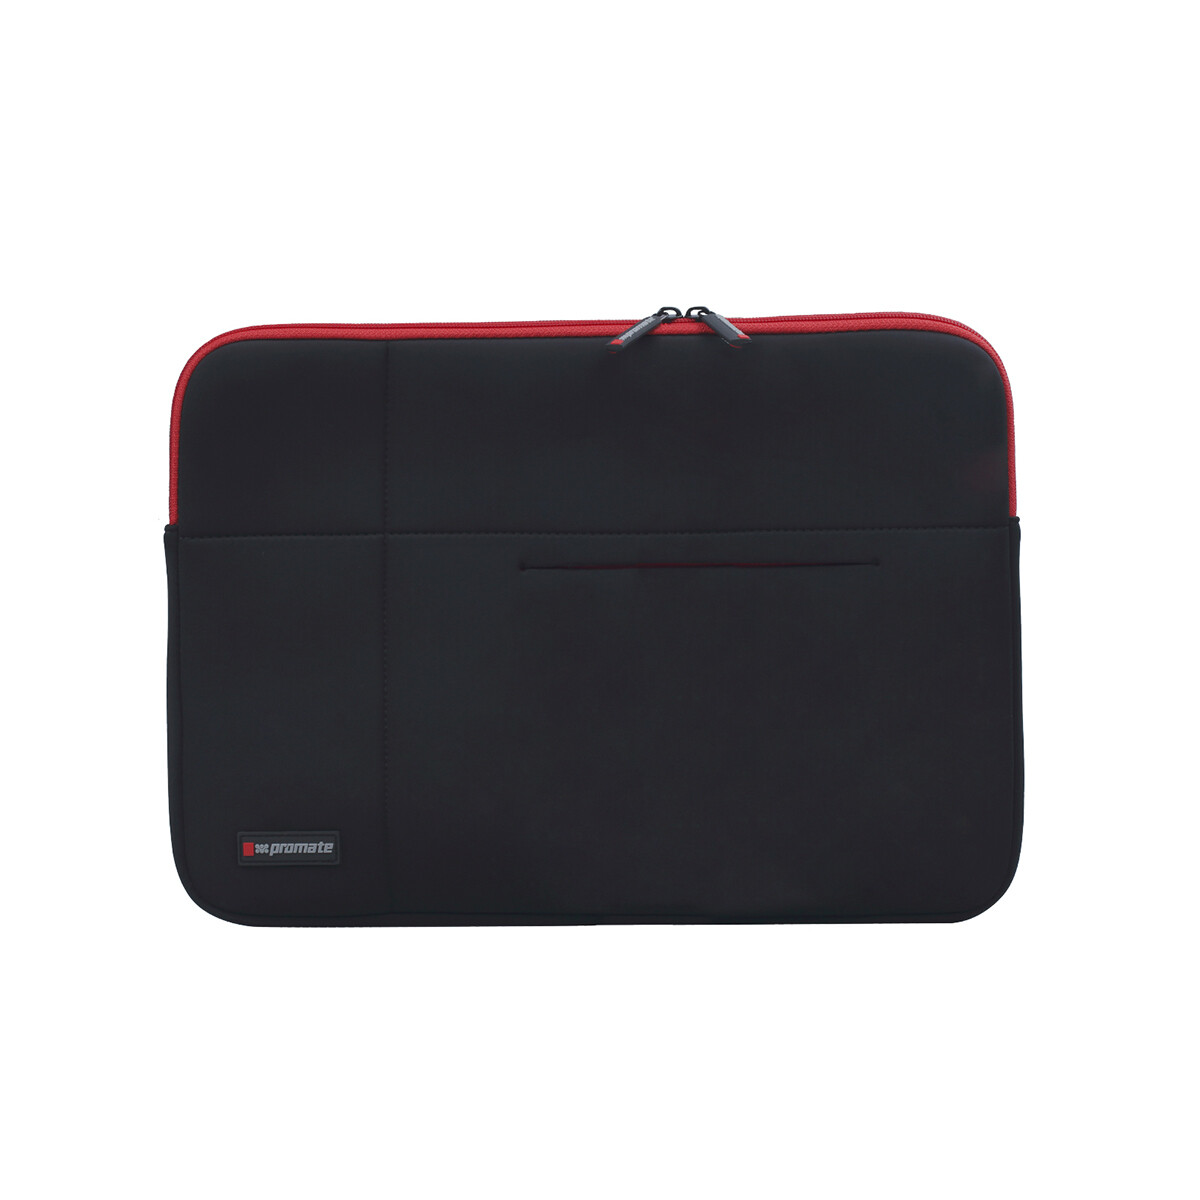 PROMATE Zipper-L Ultra-Sleek Lightweight Sleeve for Laptops up to 15.6